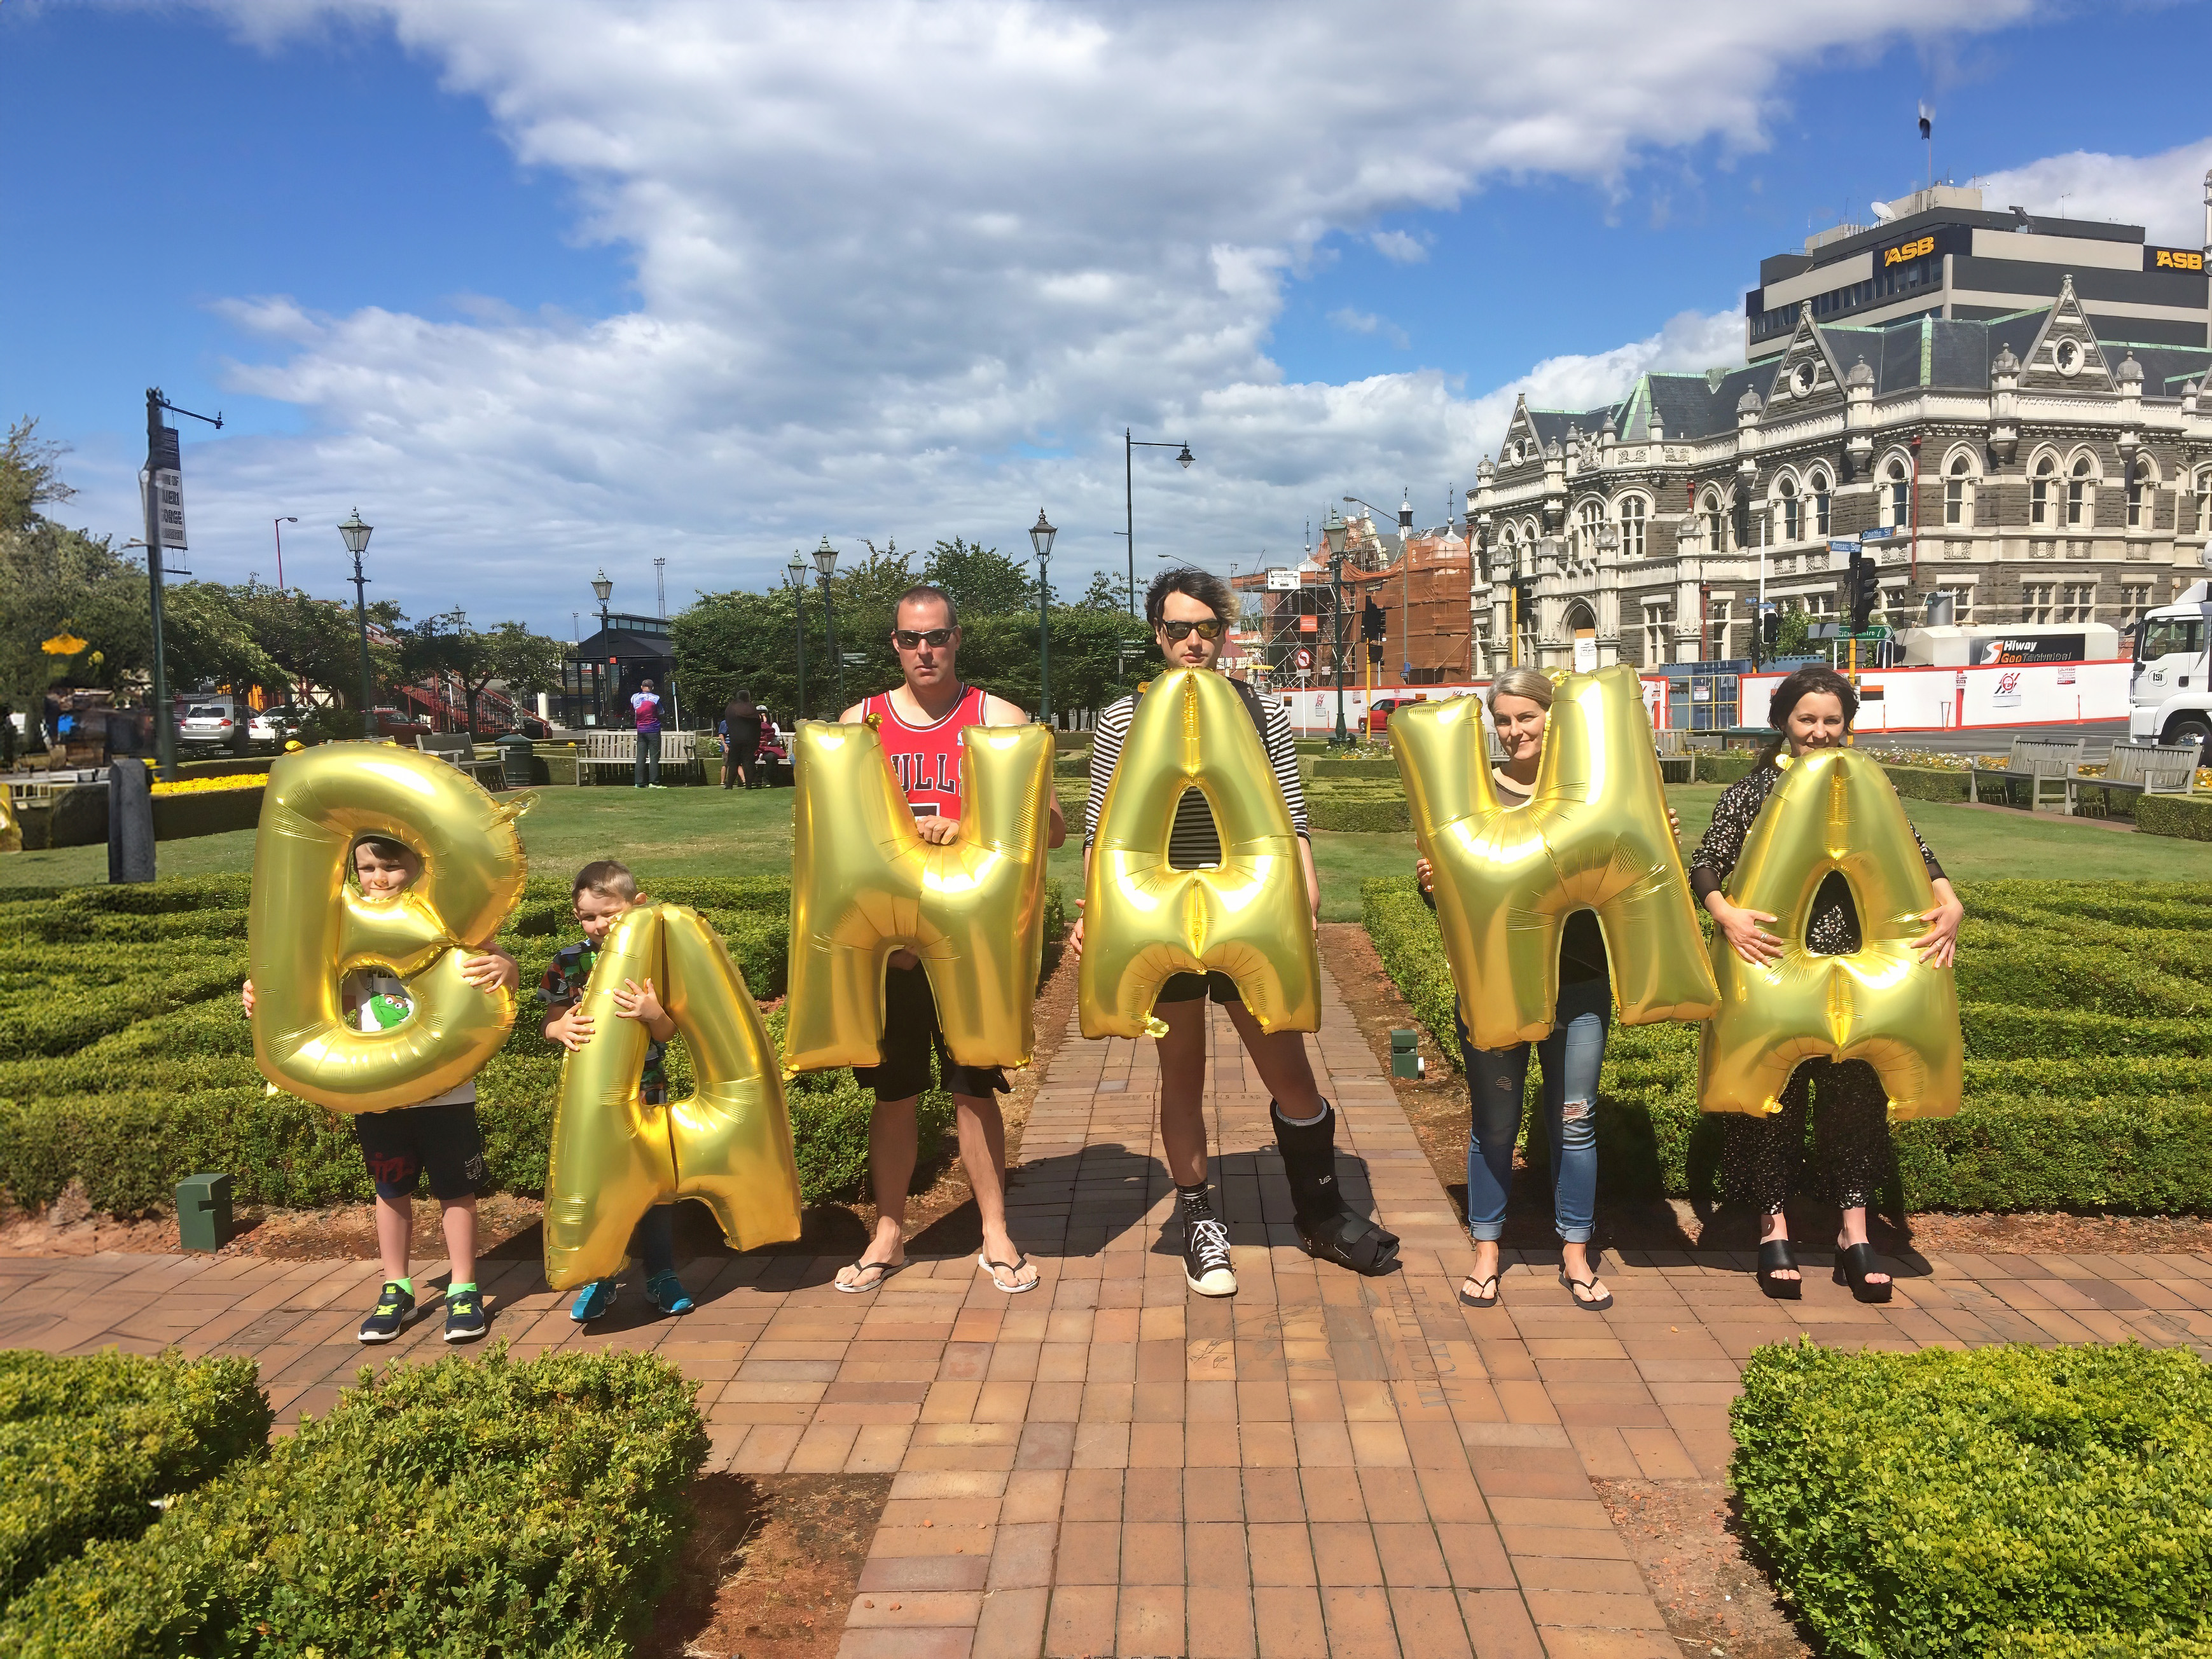 New Zealand, Dunedin, Anzac Square Gardens - Banana, Silence was Golden, gold balloons